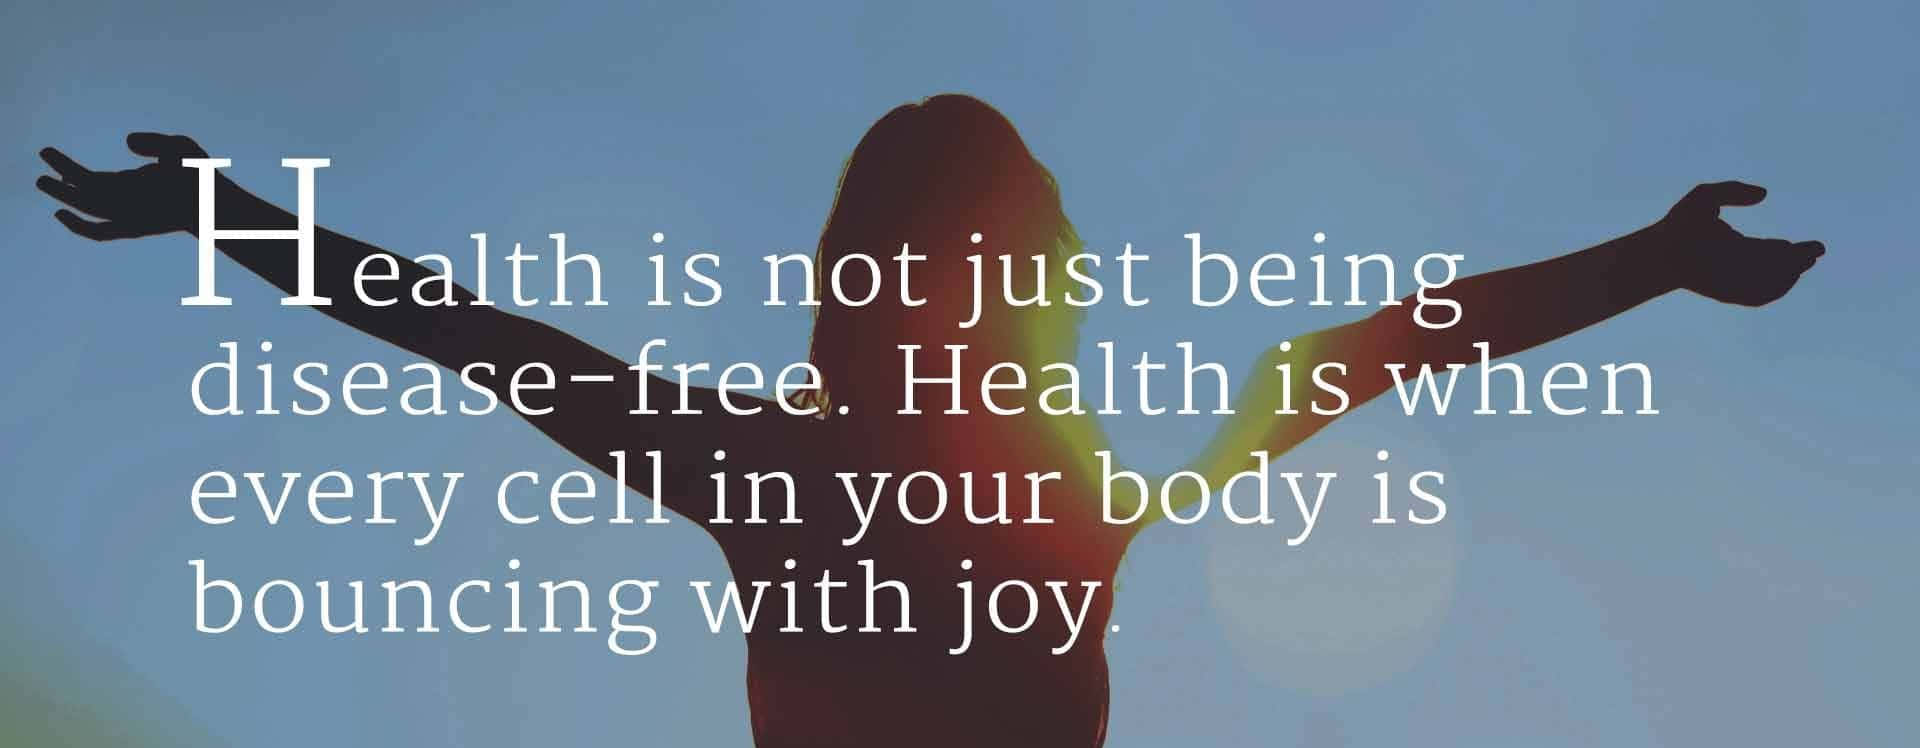 Joyful Health Inspirational Quote Wallpaper